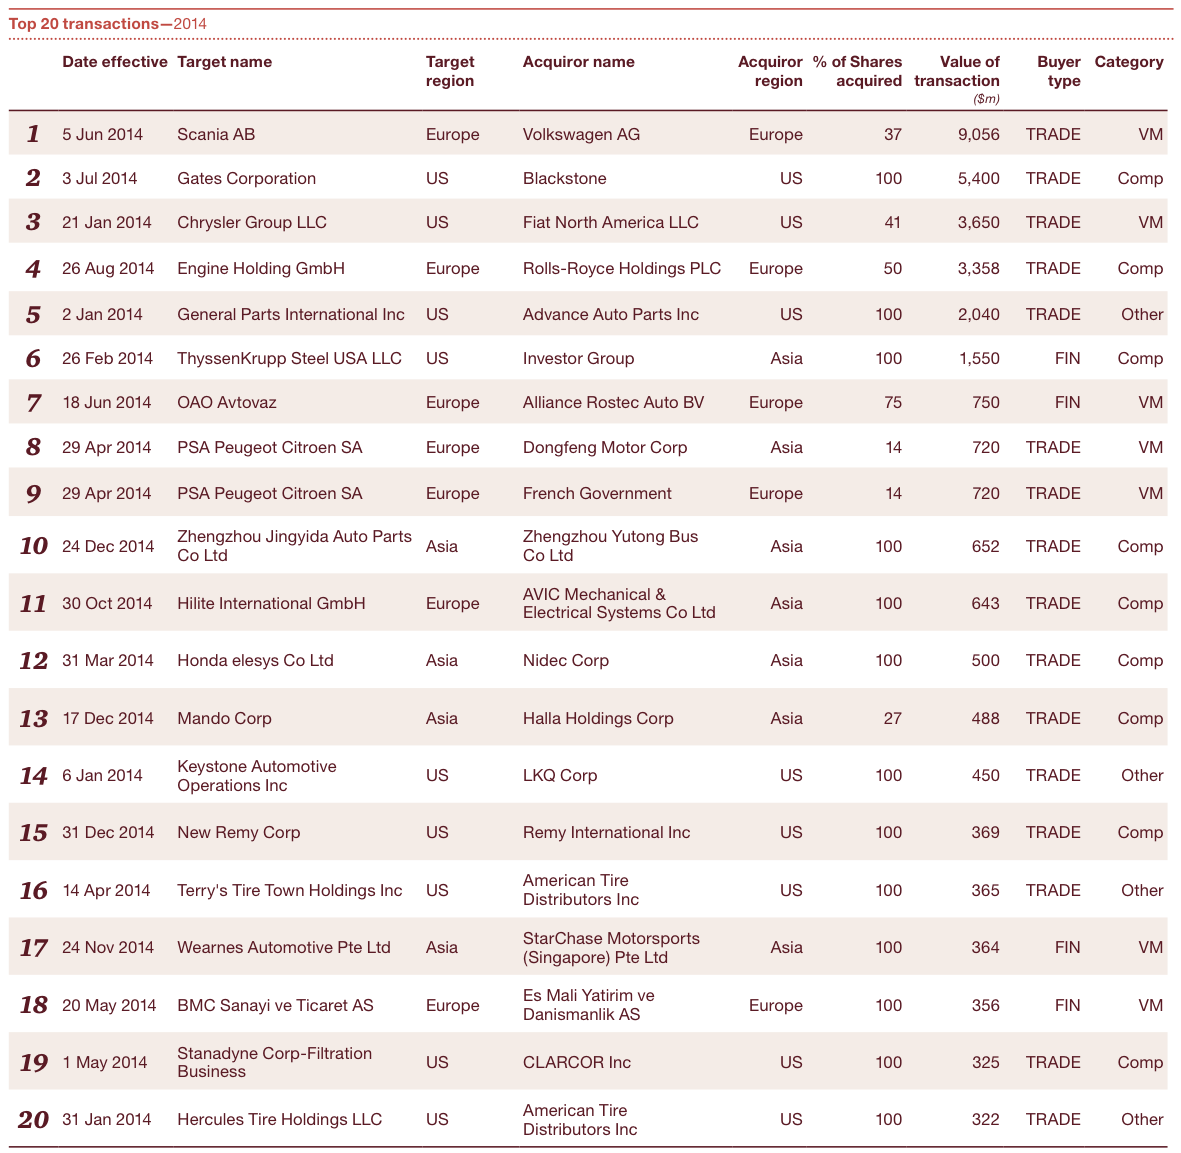 Figure 2 Top 20 transactions 2014